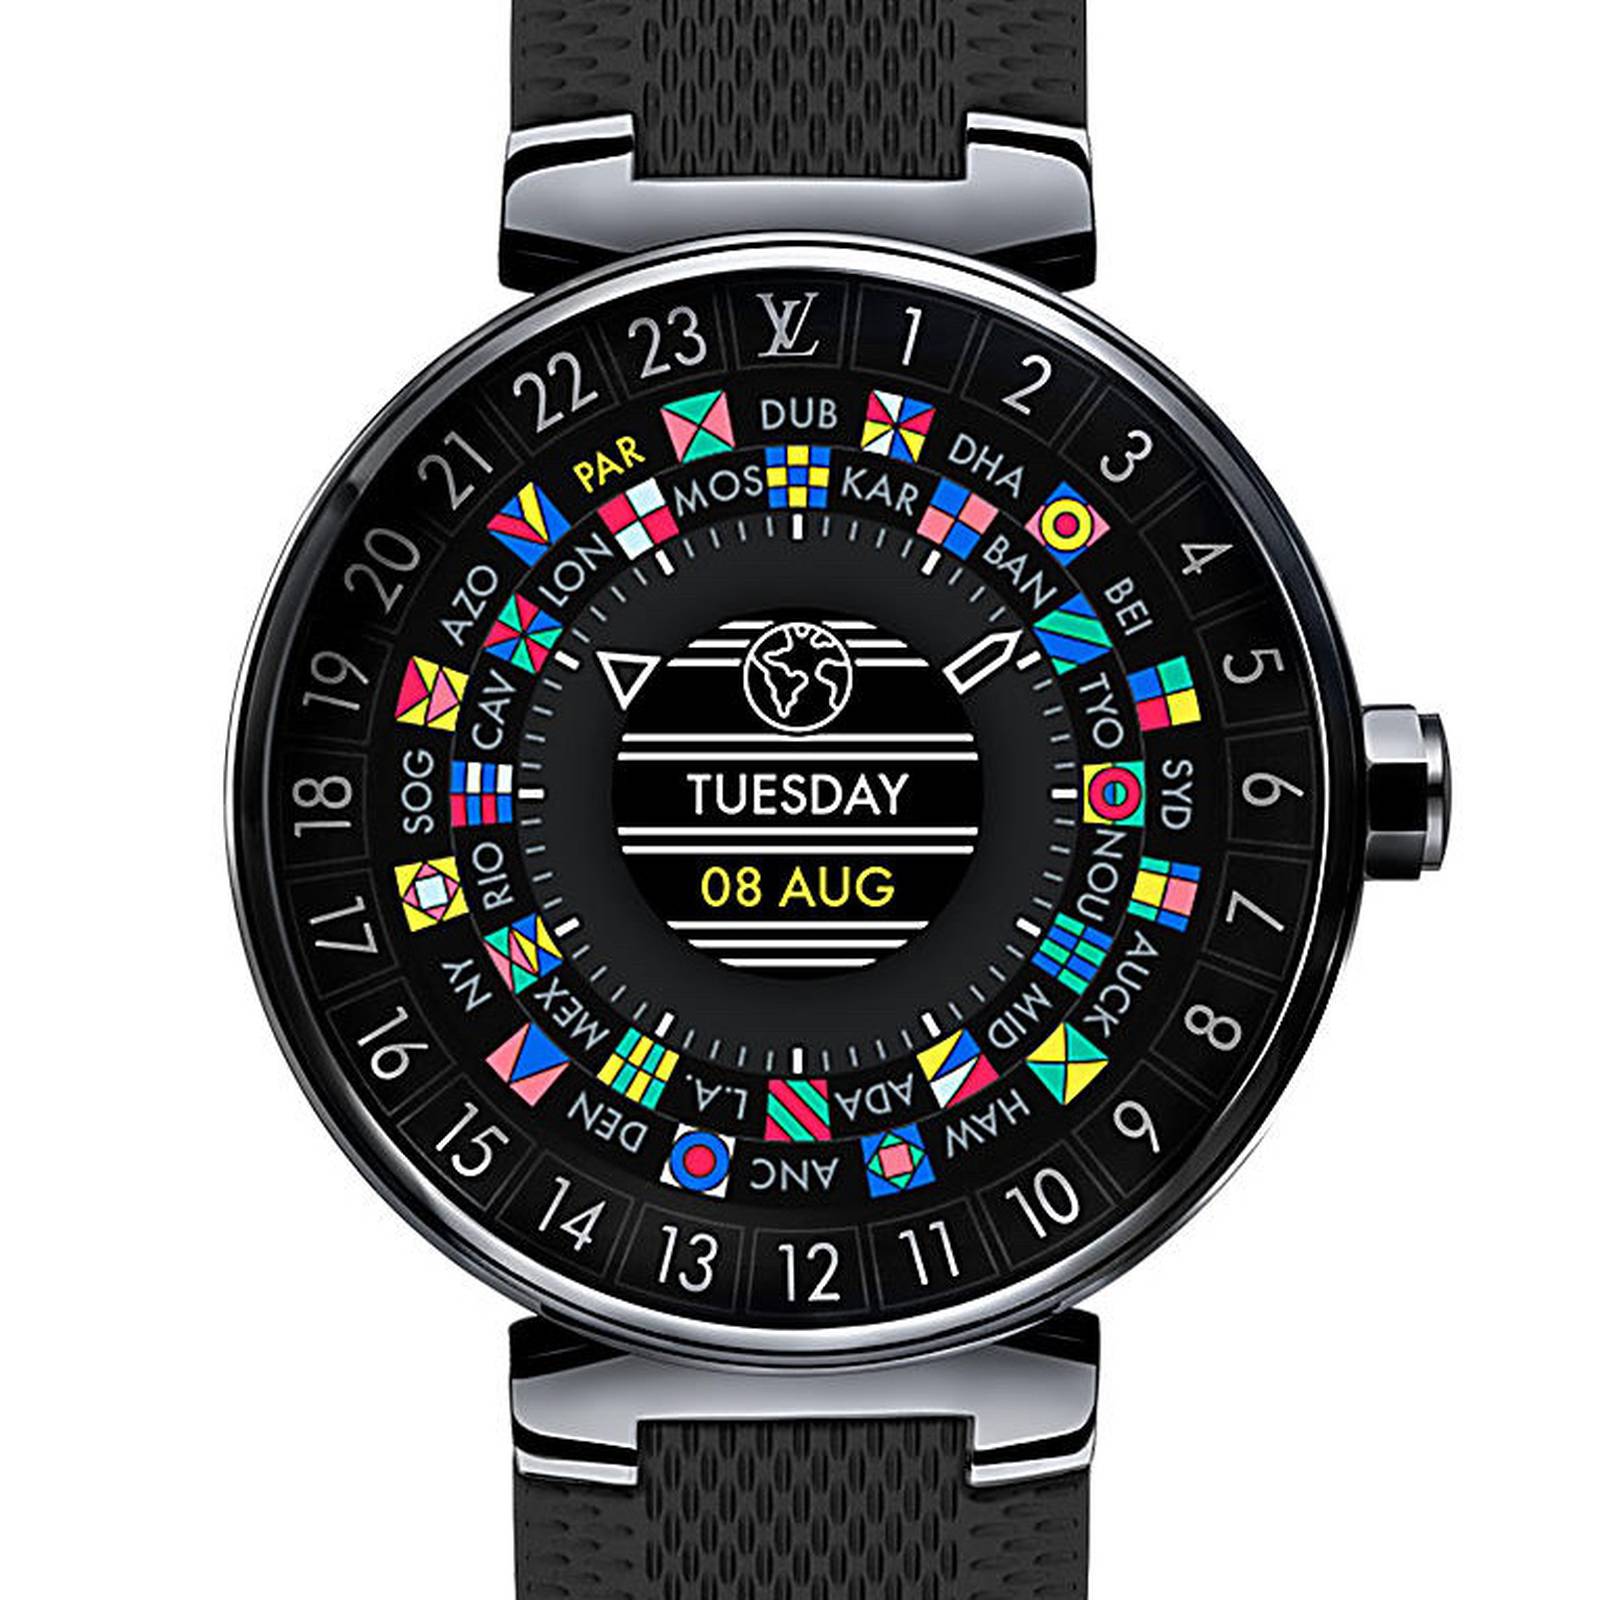 Louis Vuitton courts Millennials with new smartwatch